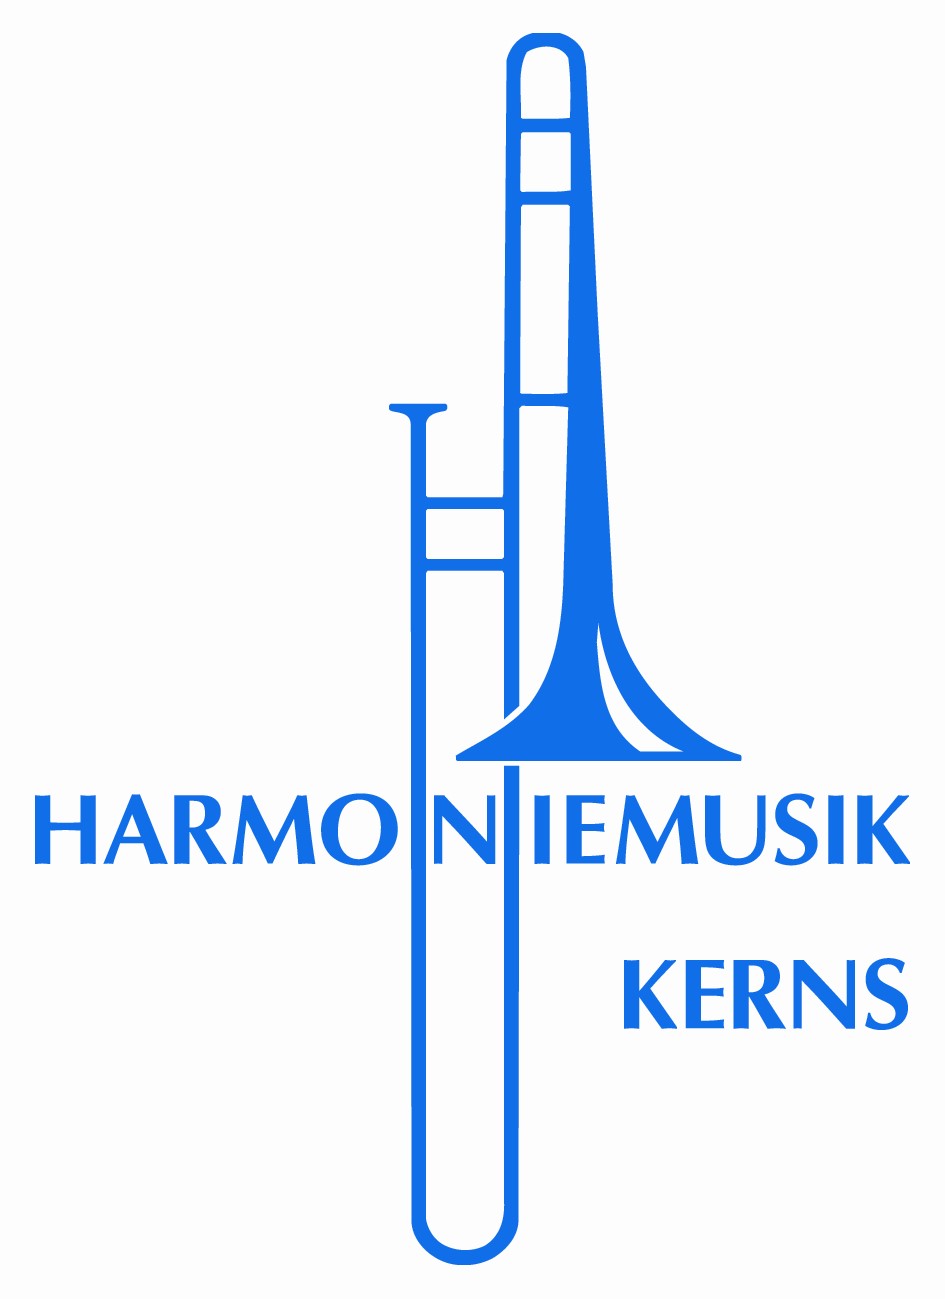 Harmoniemusik Kerns